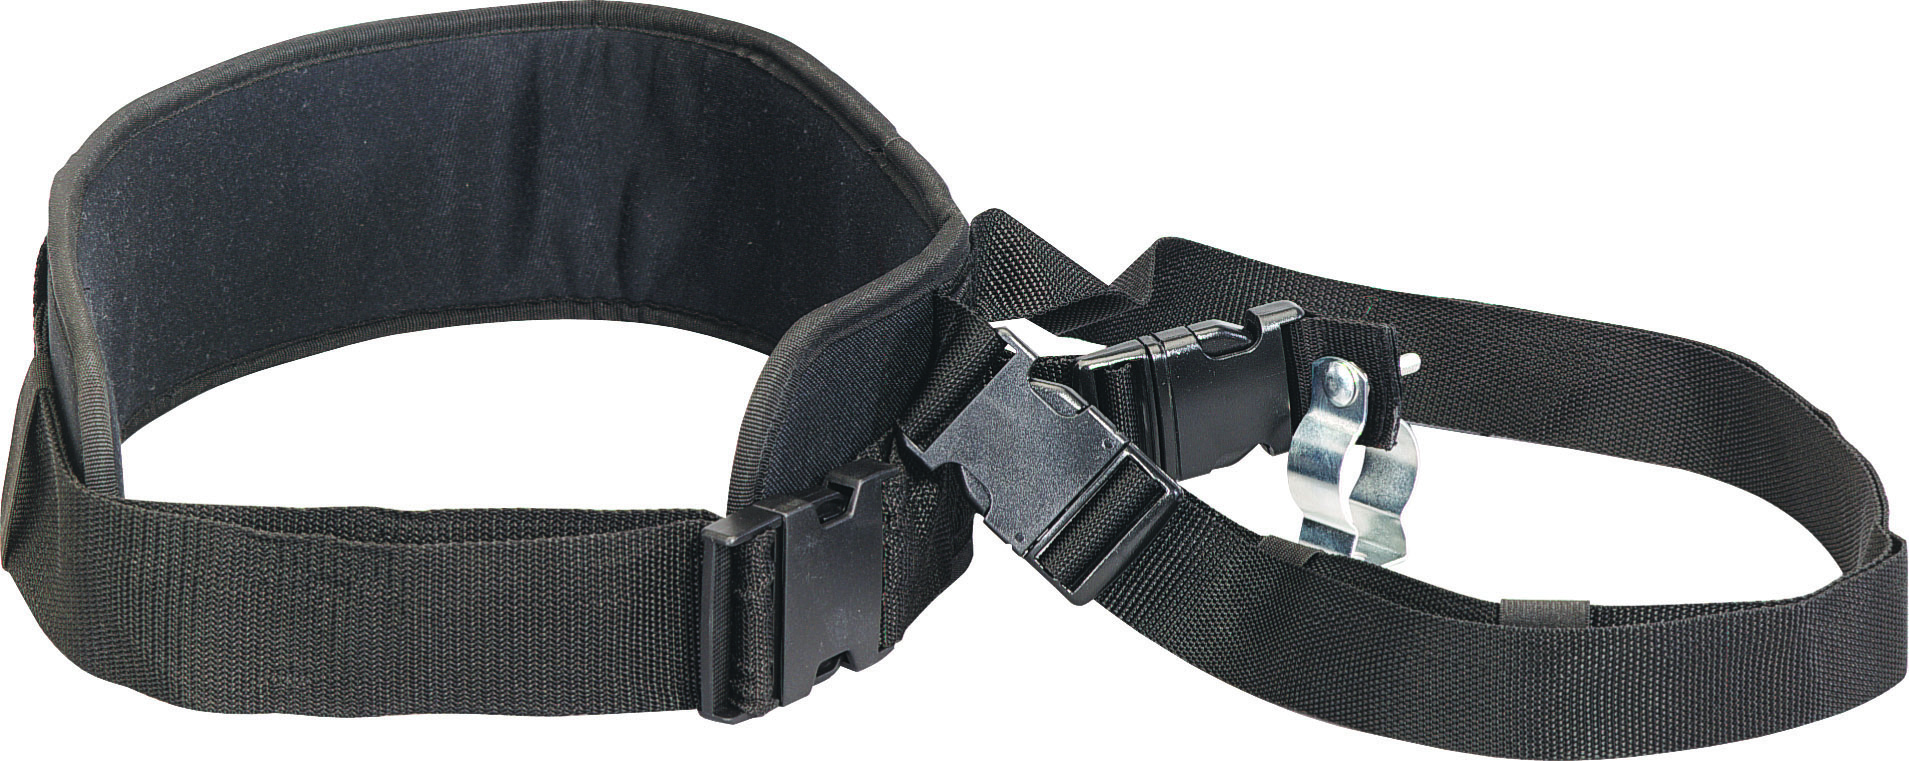 Wand belt - adjustable